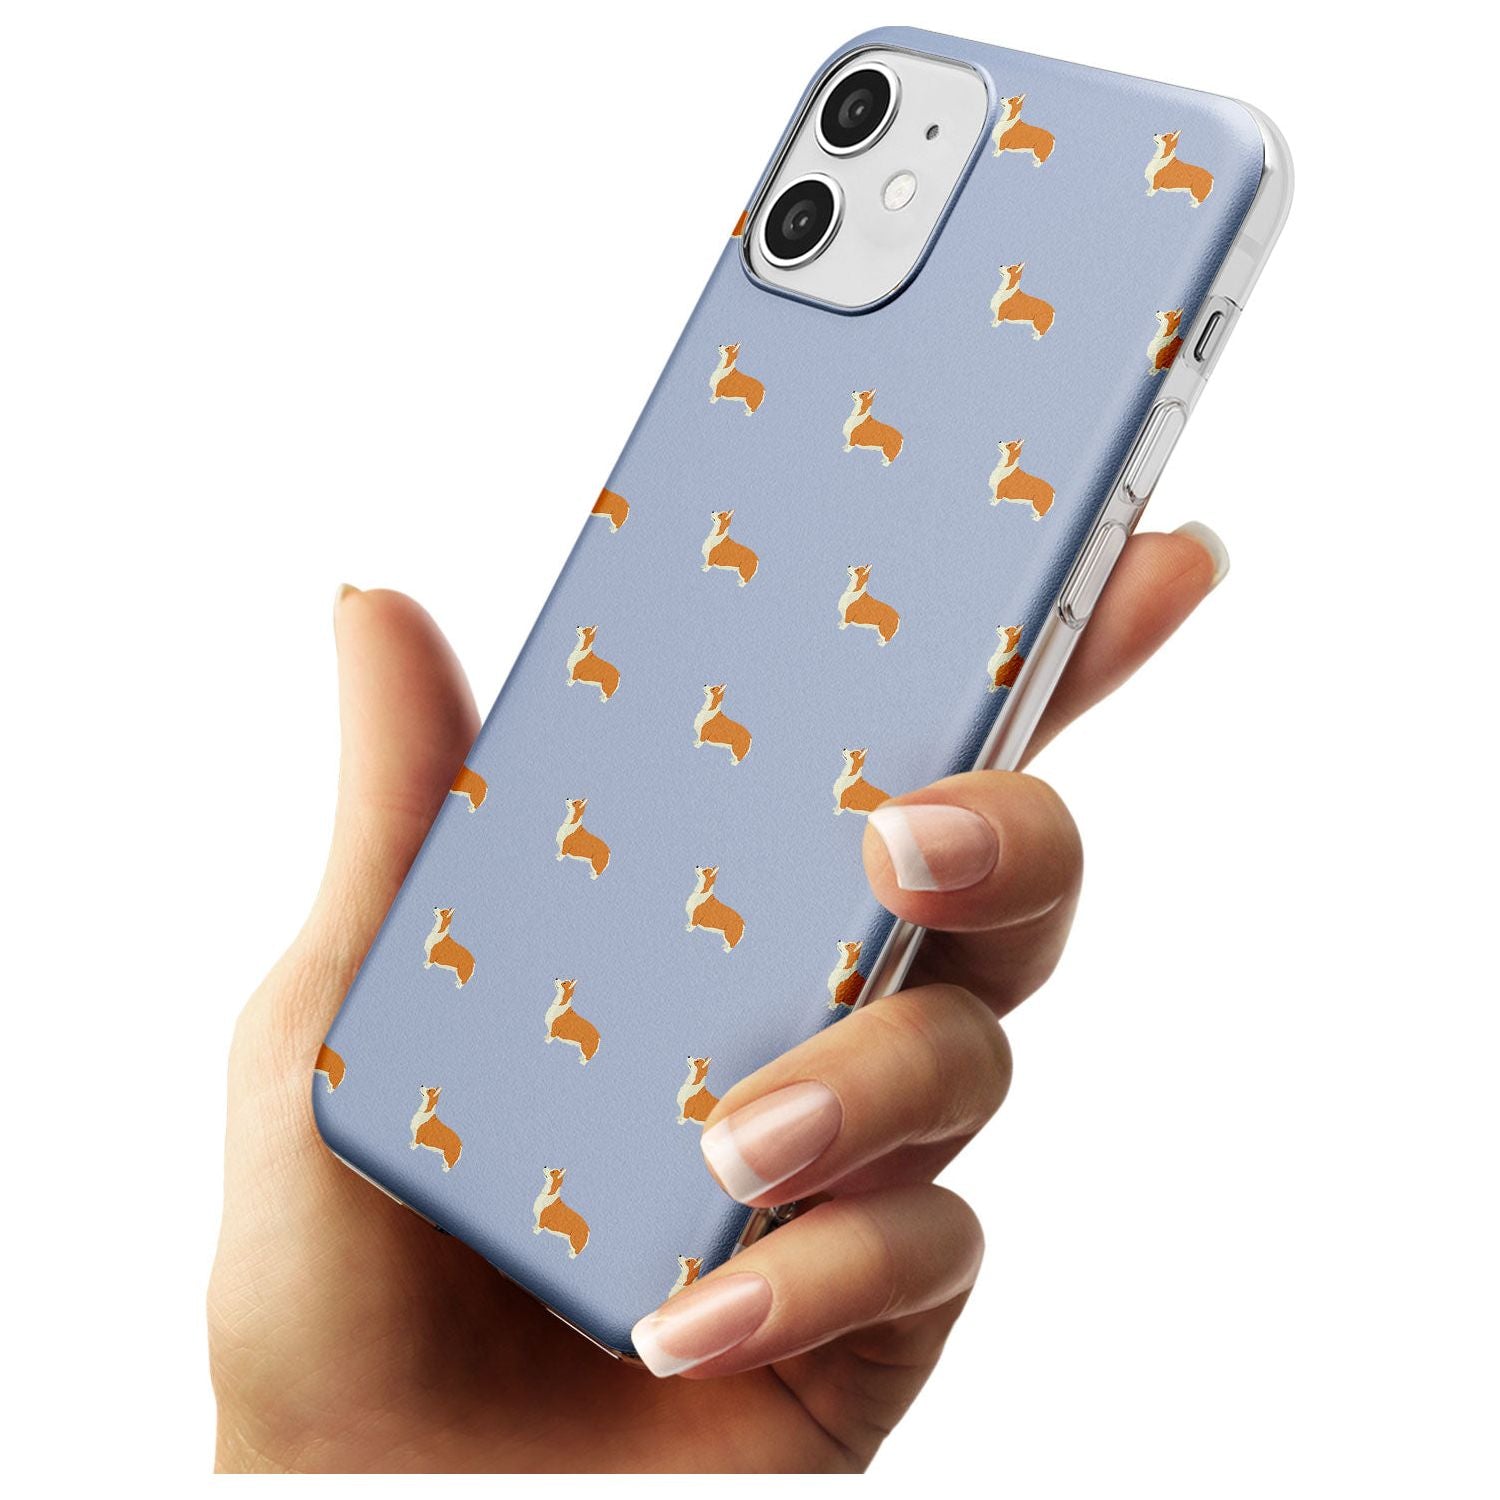 Pembroke Welsh Corgi Dog Pattern Slim TPU Phone Case for iPhone 11